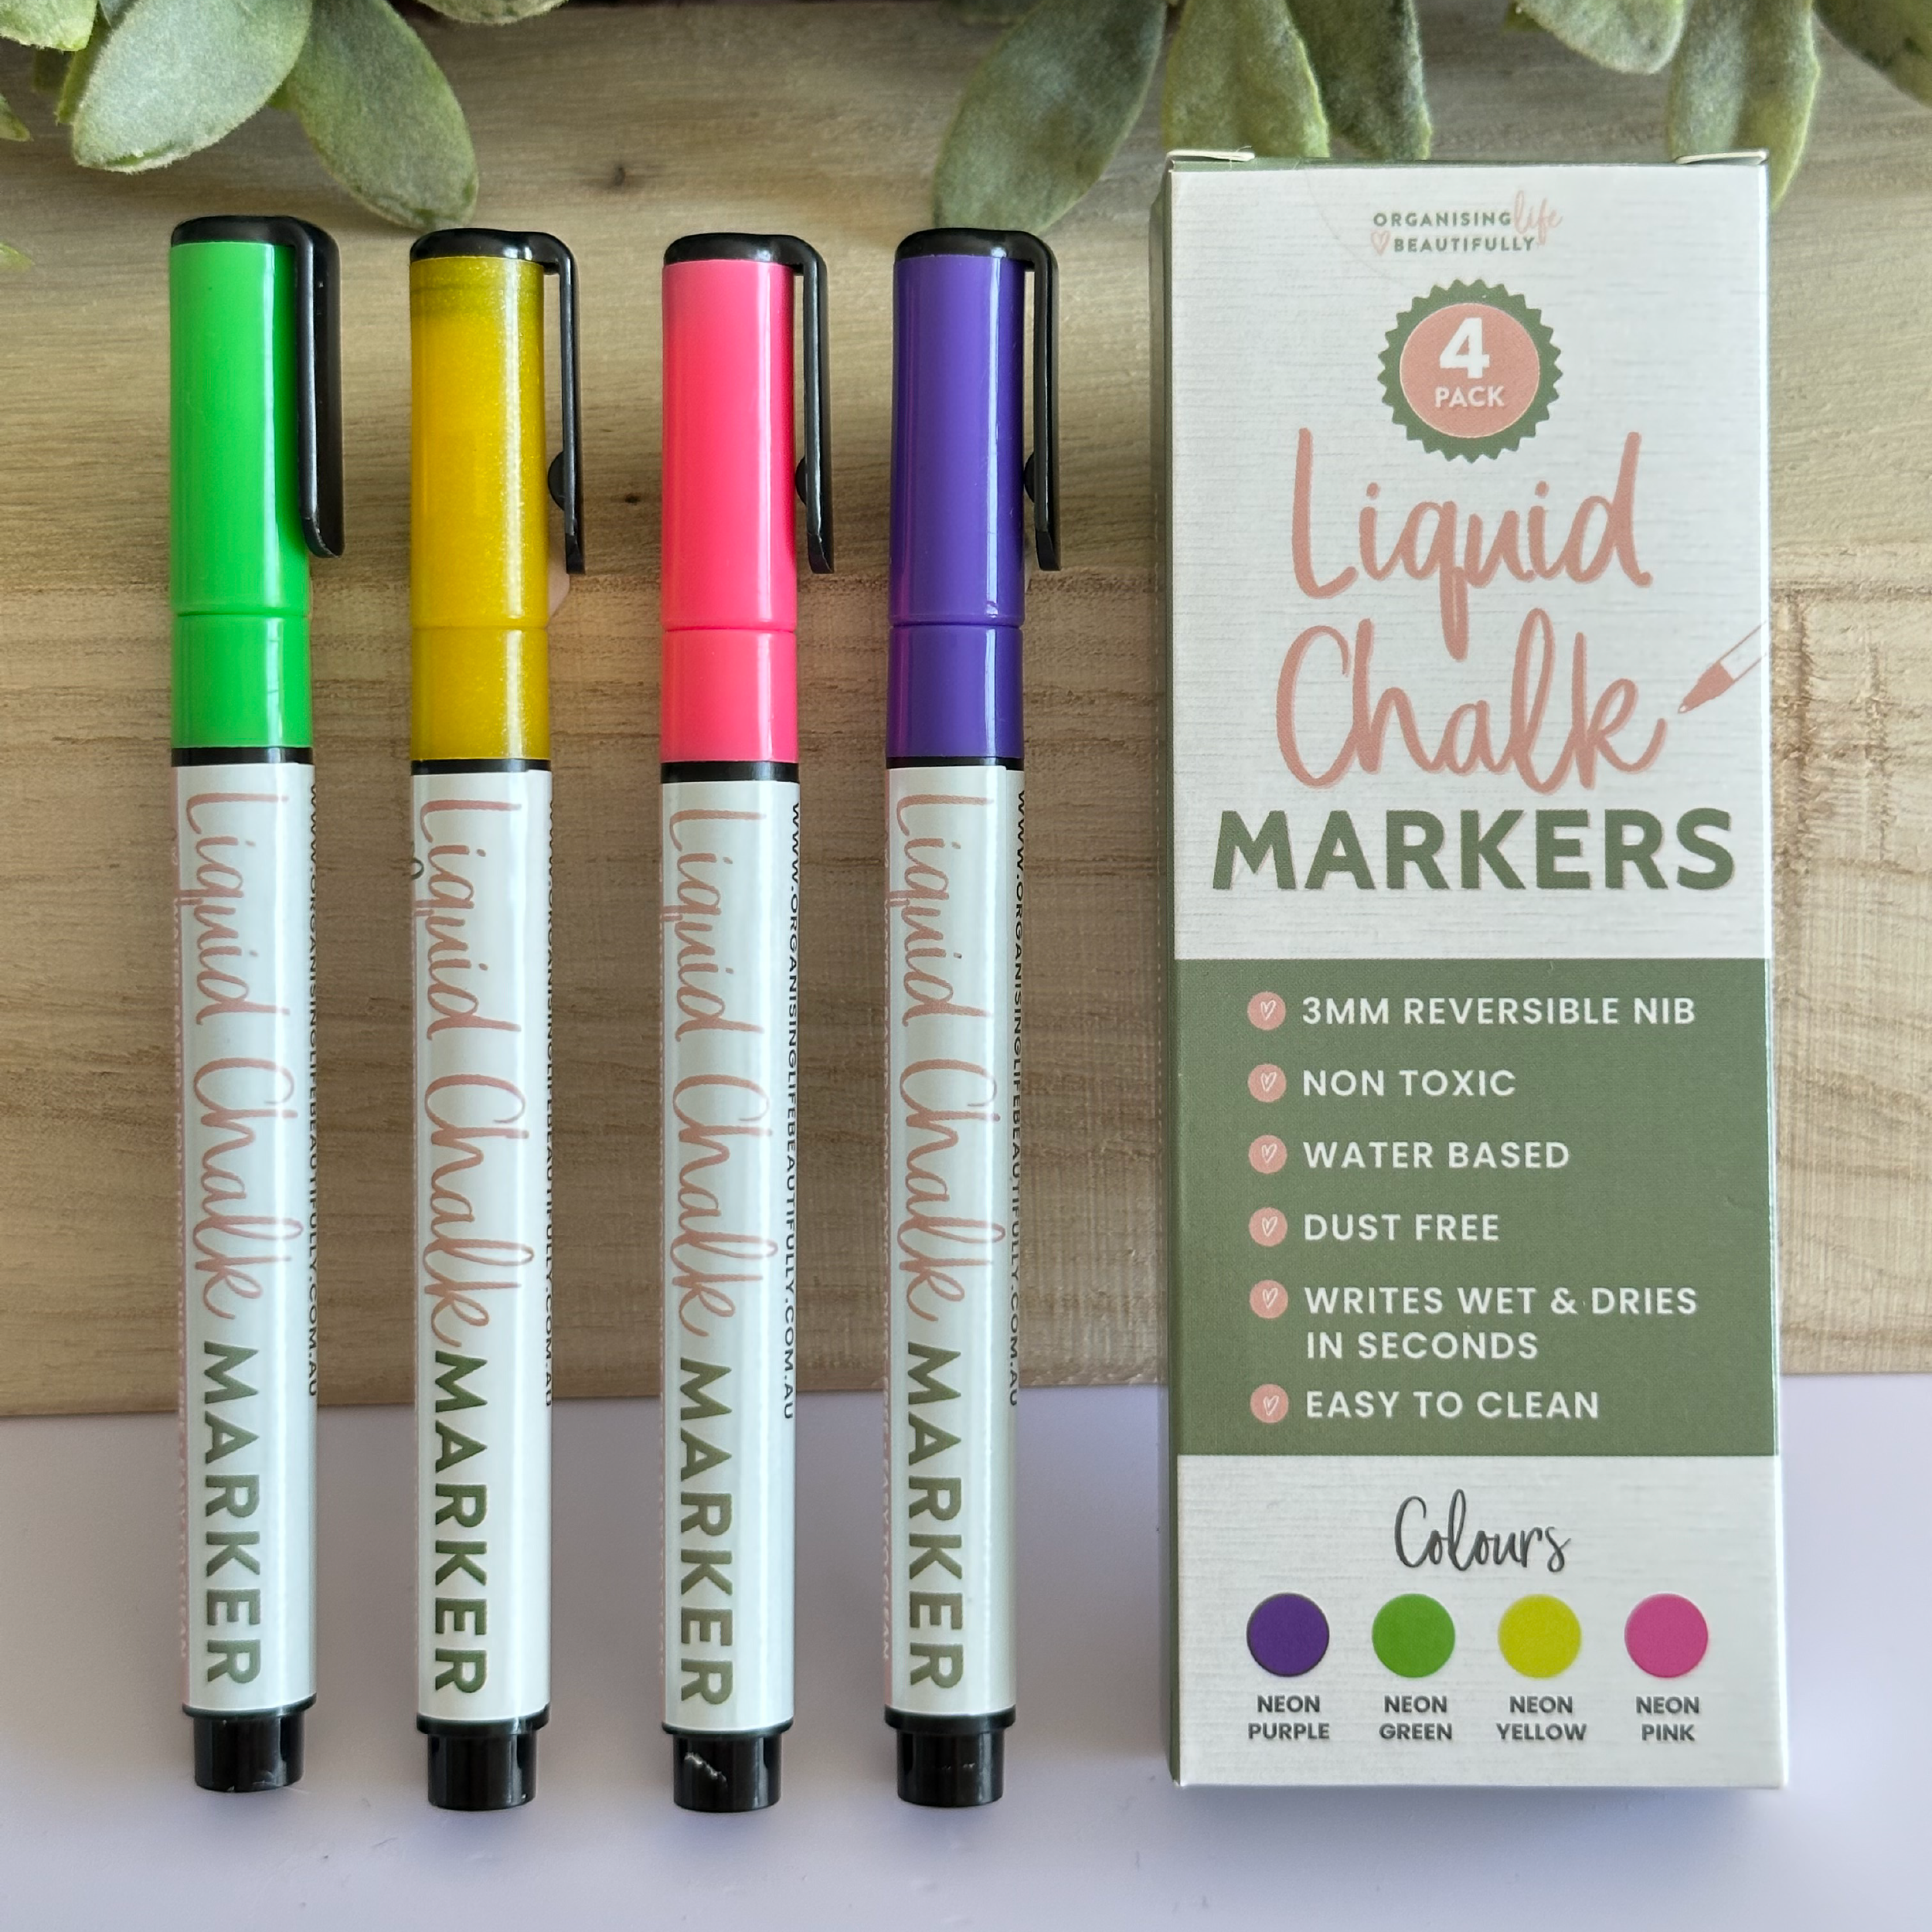 Neon Liquid Chalk Markers